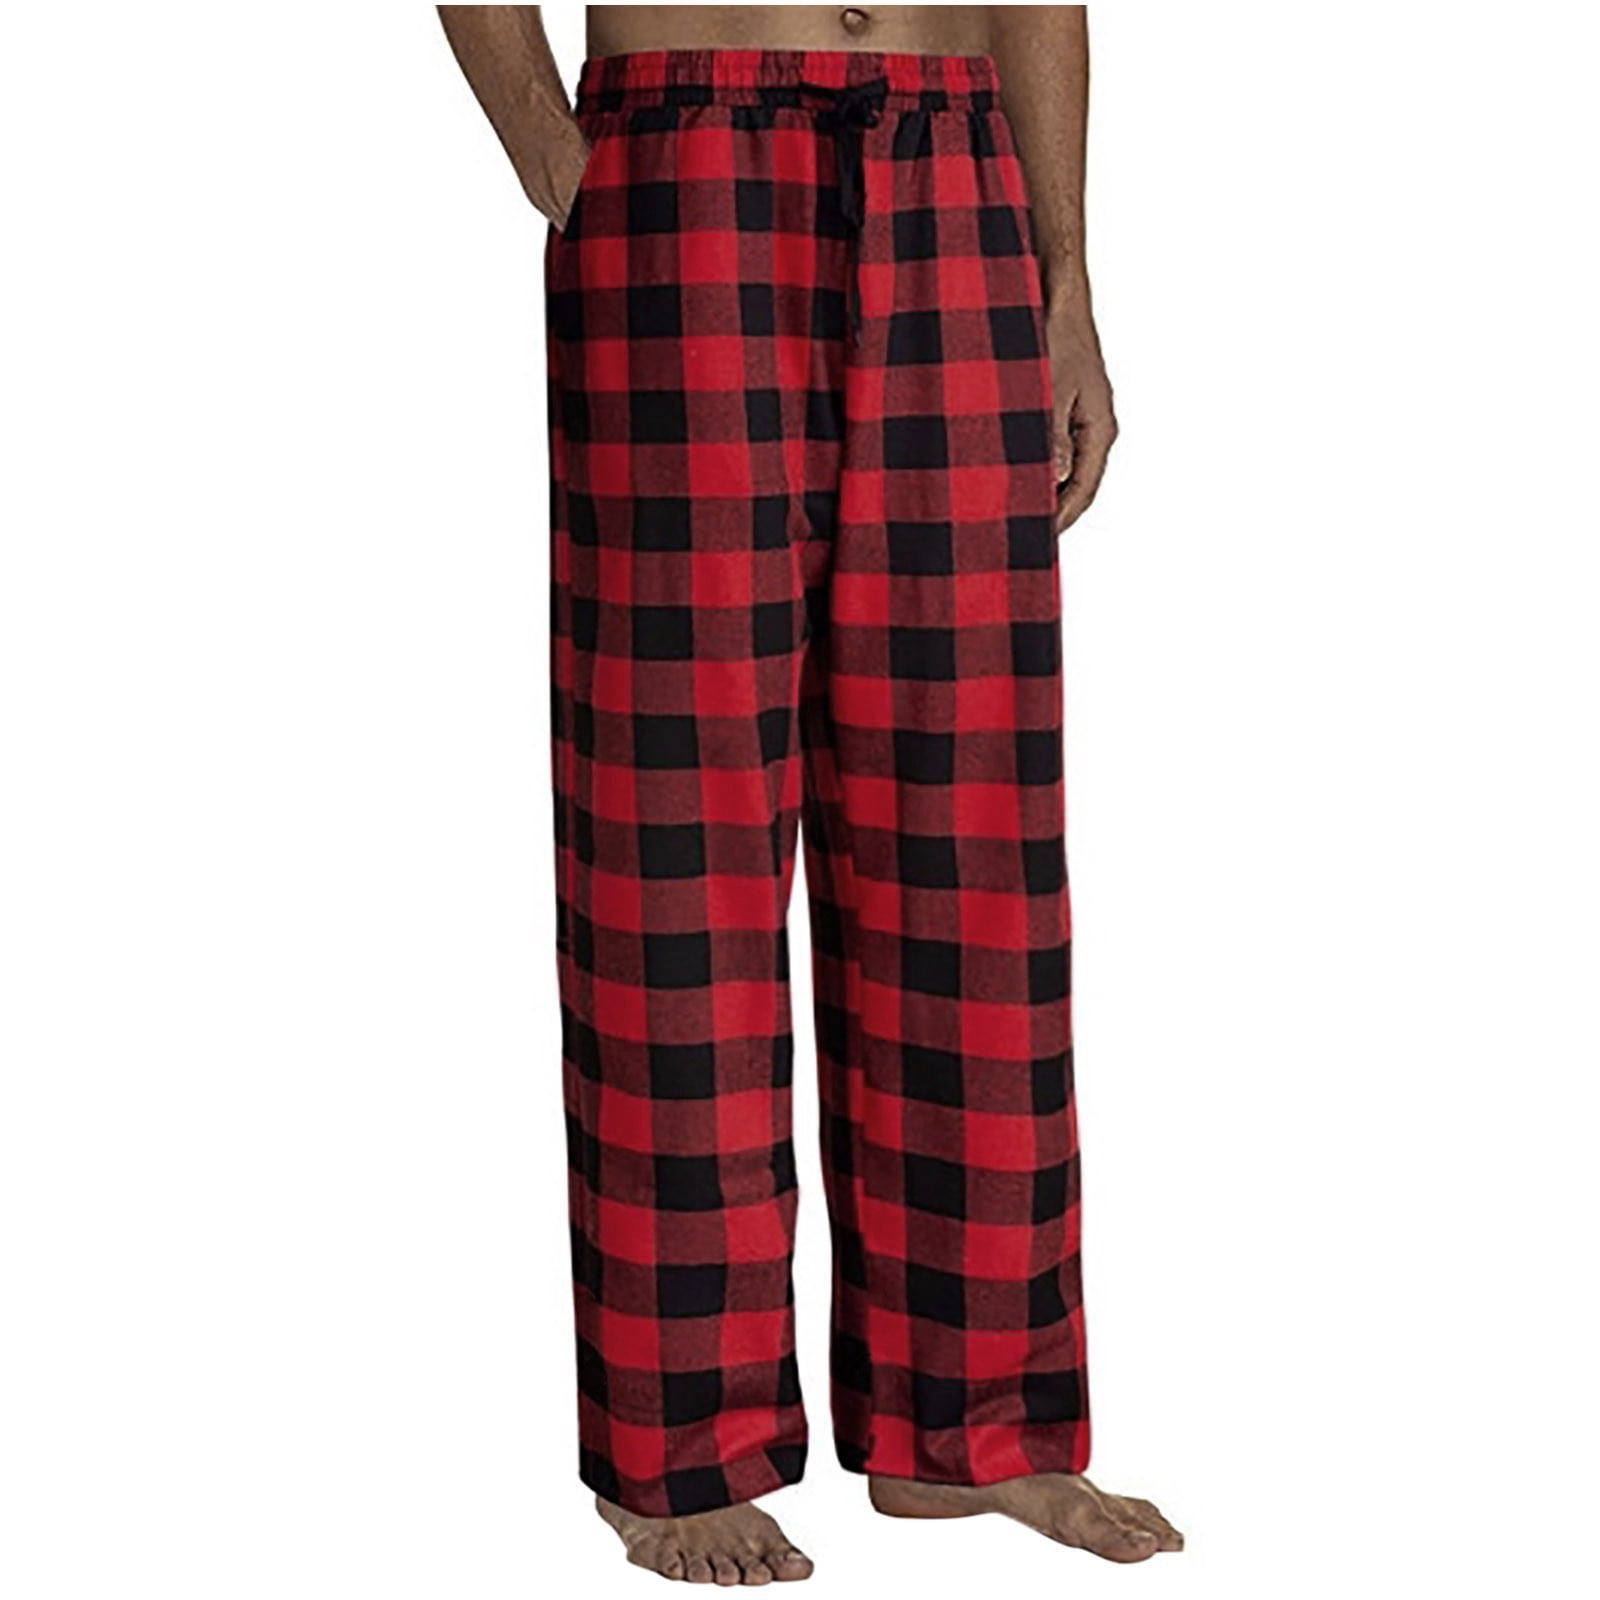 XFLWAM Mens Pajamas Plaid Pajama Pants Sleep Long Lounge Pant with Pockets  Soft PJ Bottoms Classic Home Wear Elastic Waist Green S 